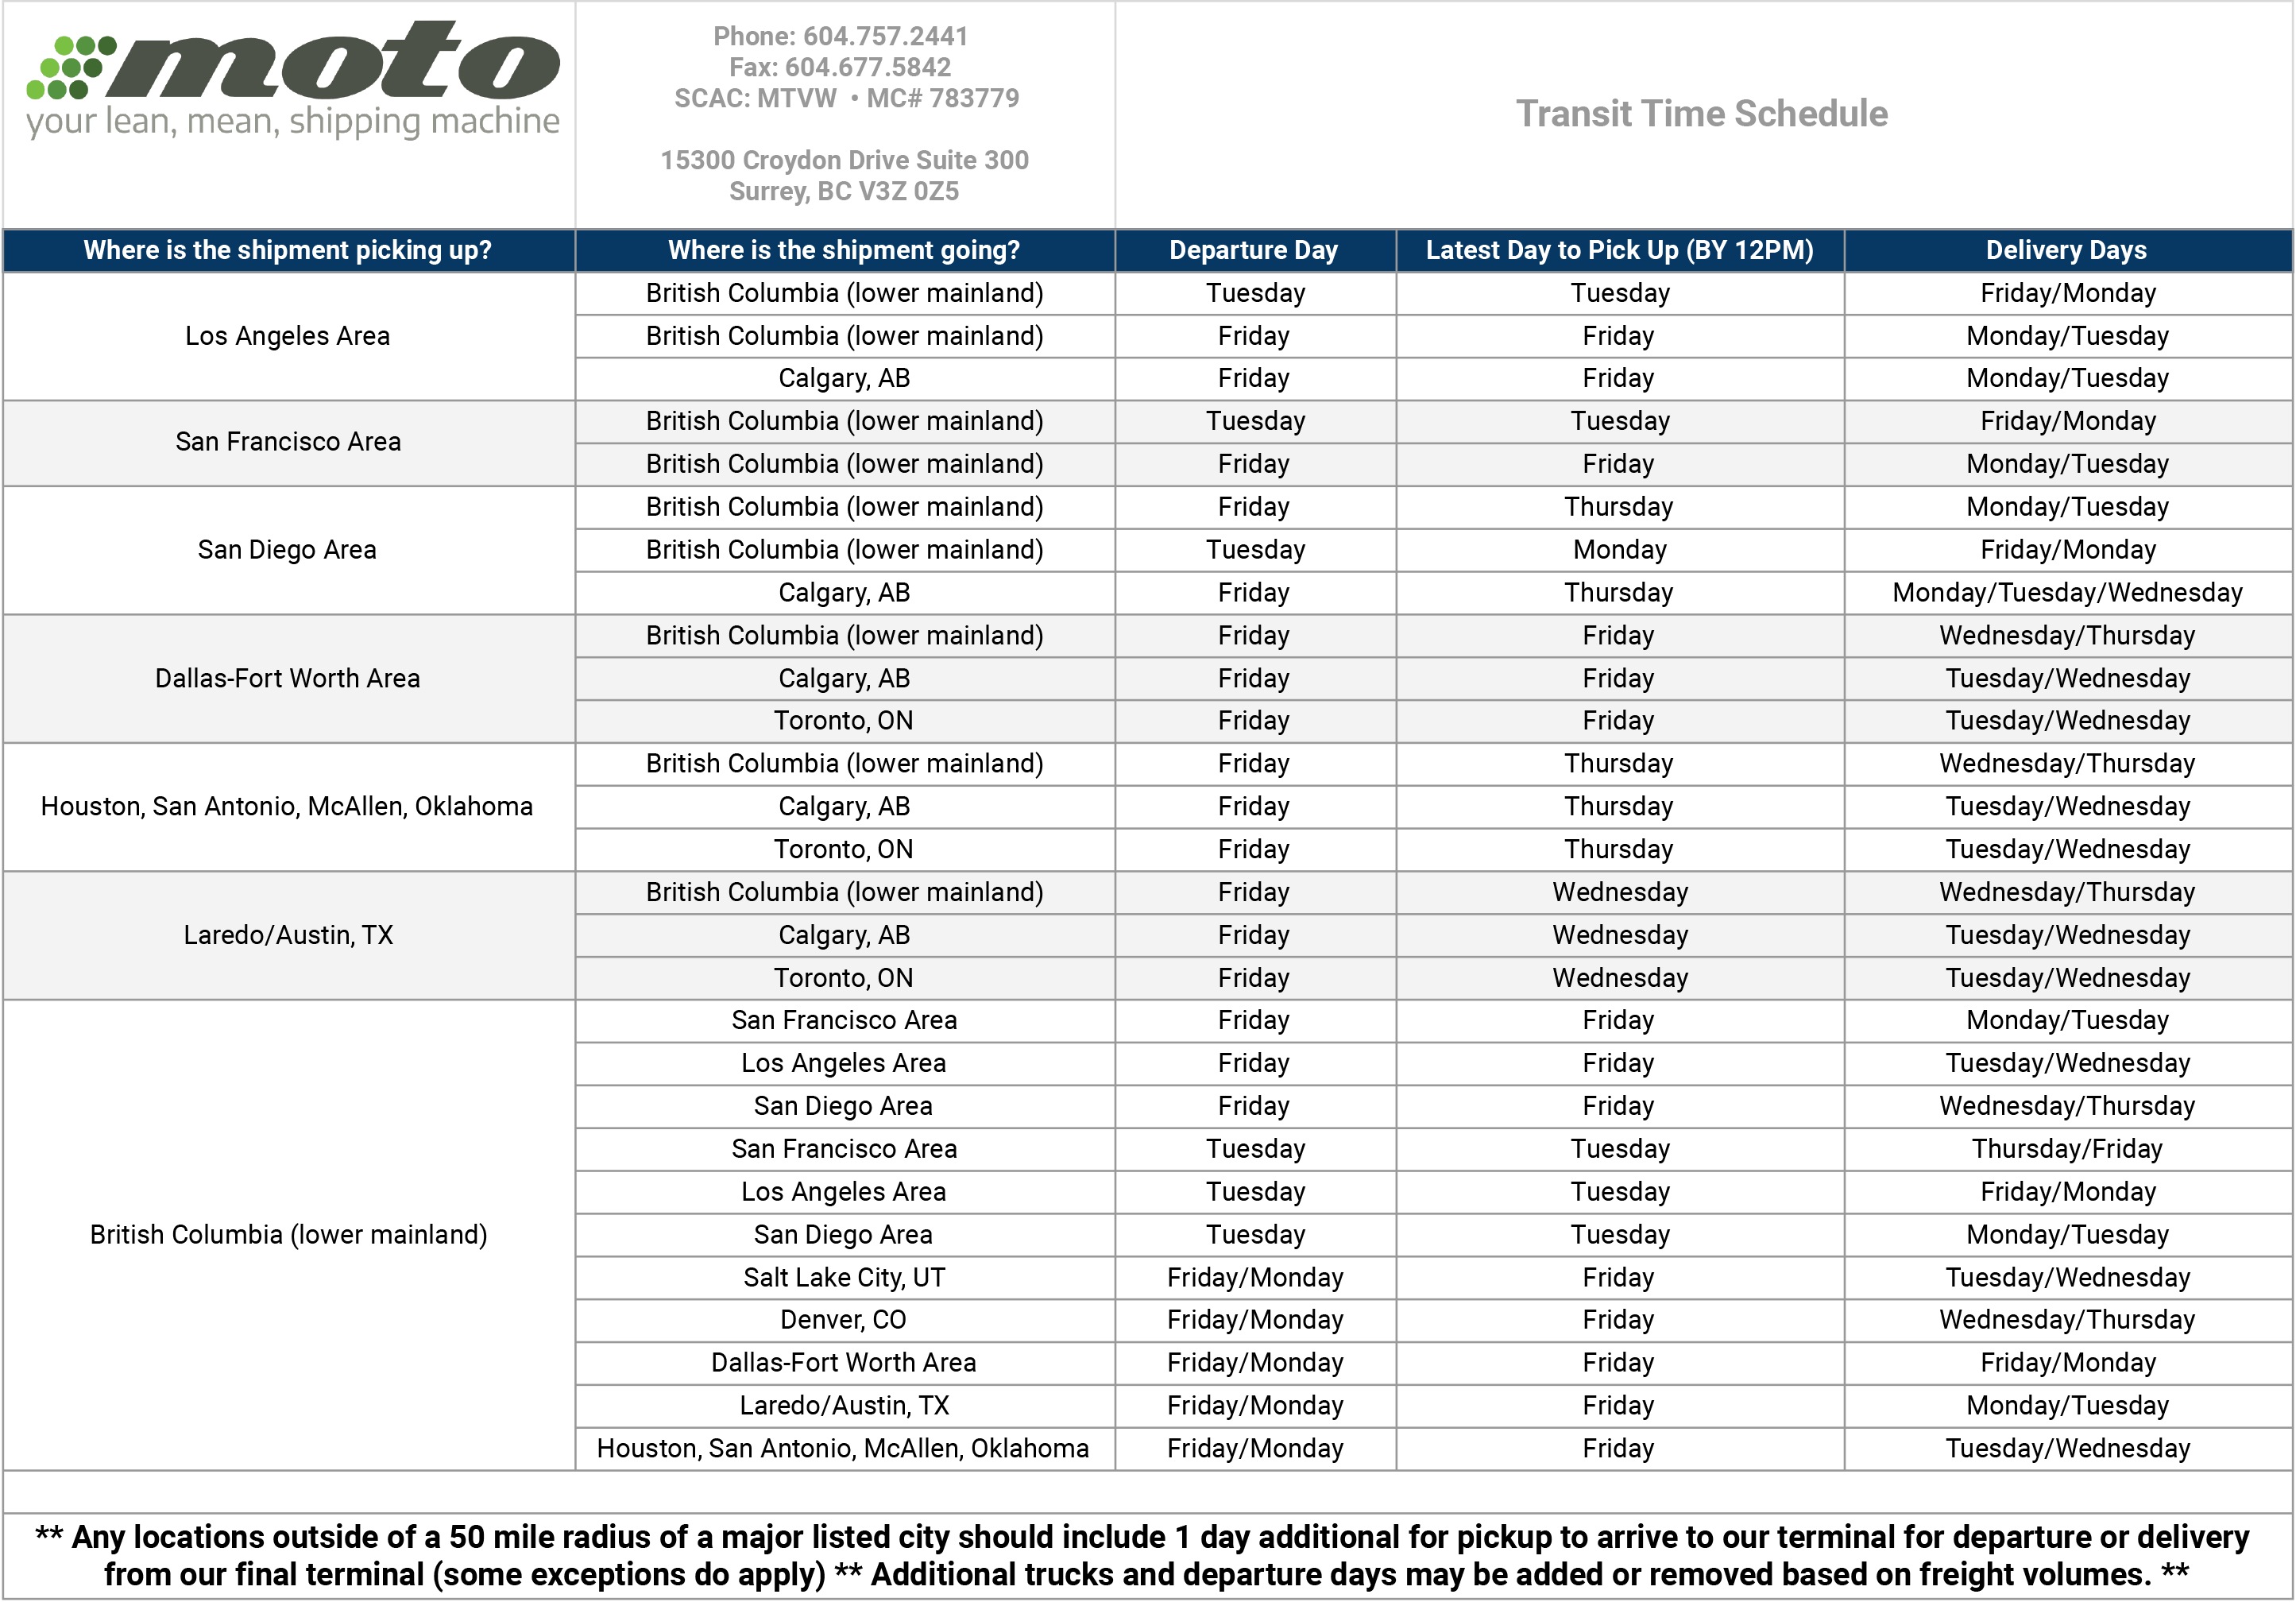 Daily Transit Schedule - Sheet1